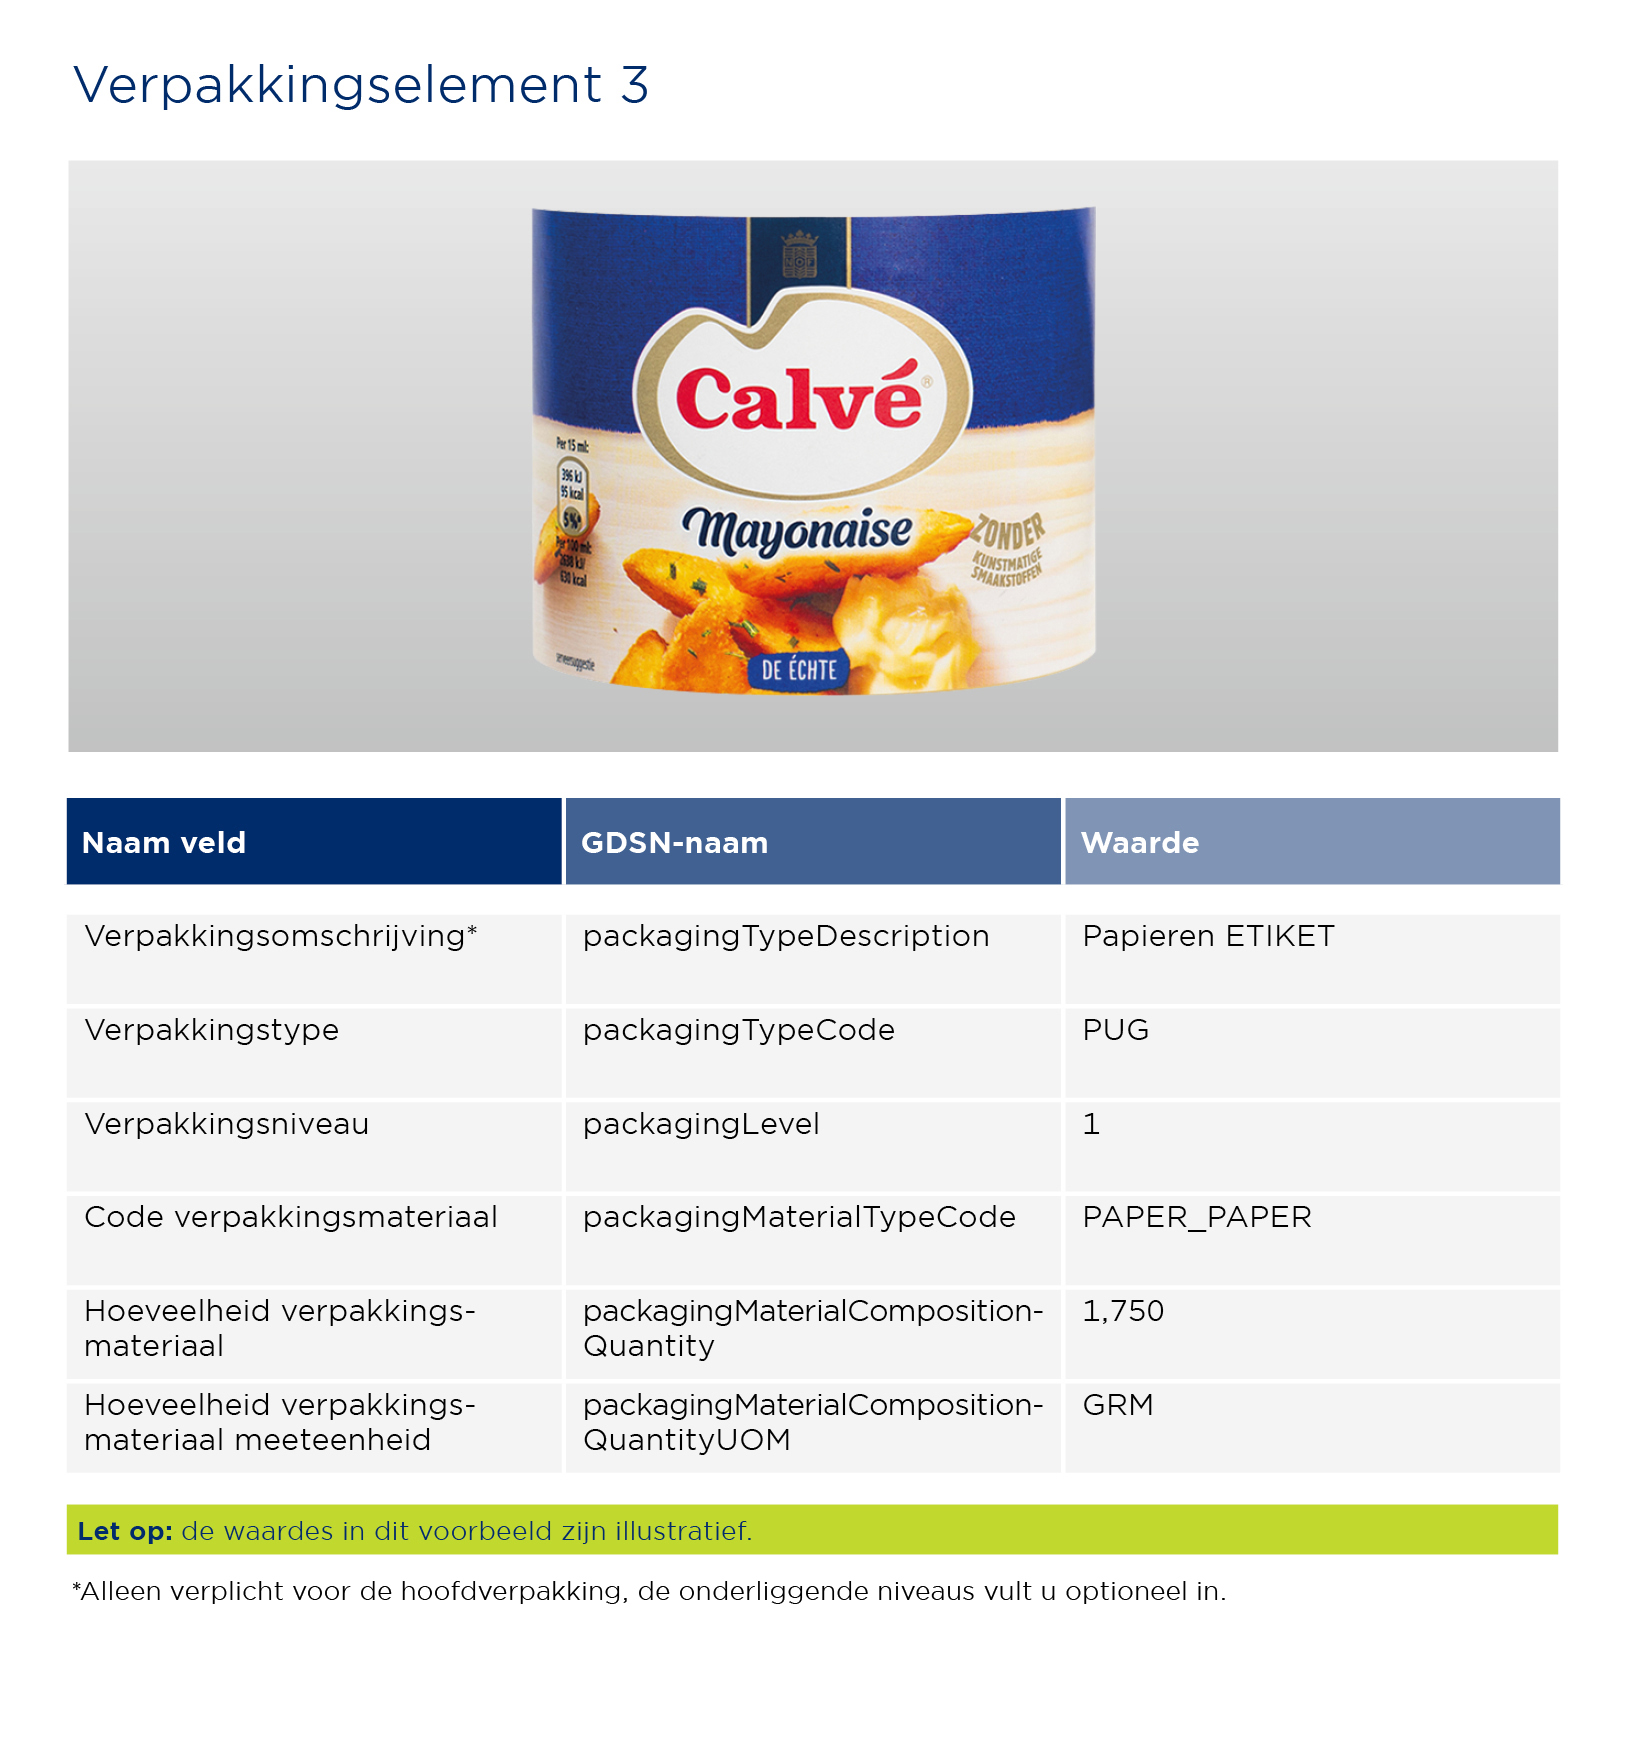 Verpakkingselement 3 - pot mayonaise